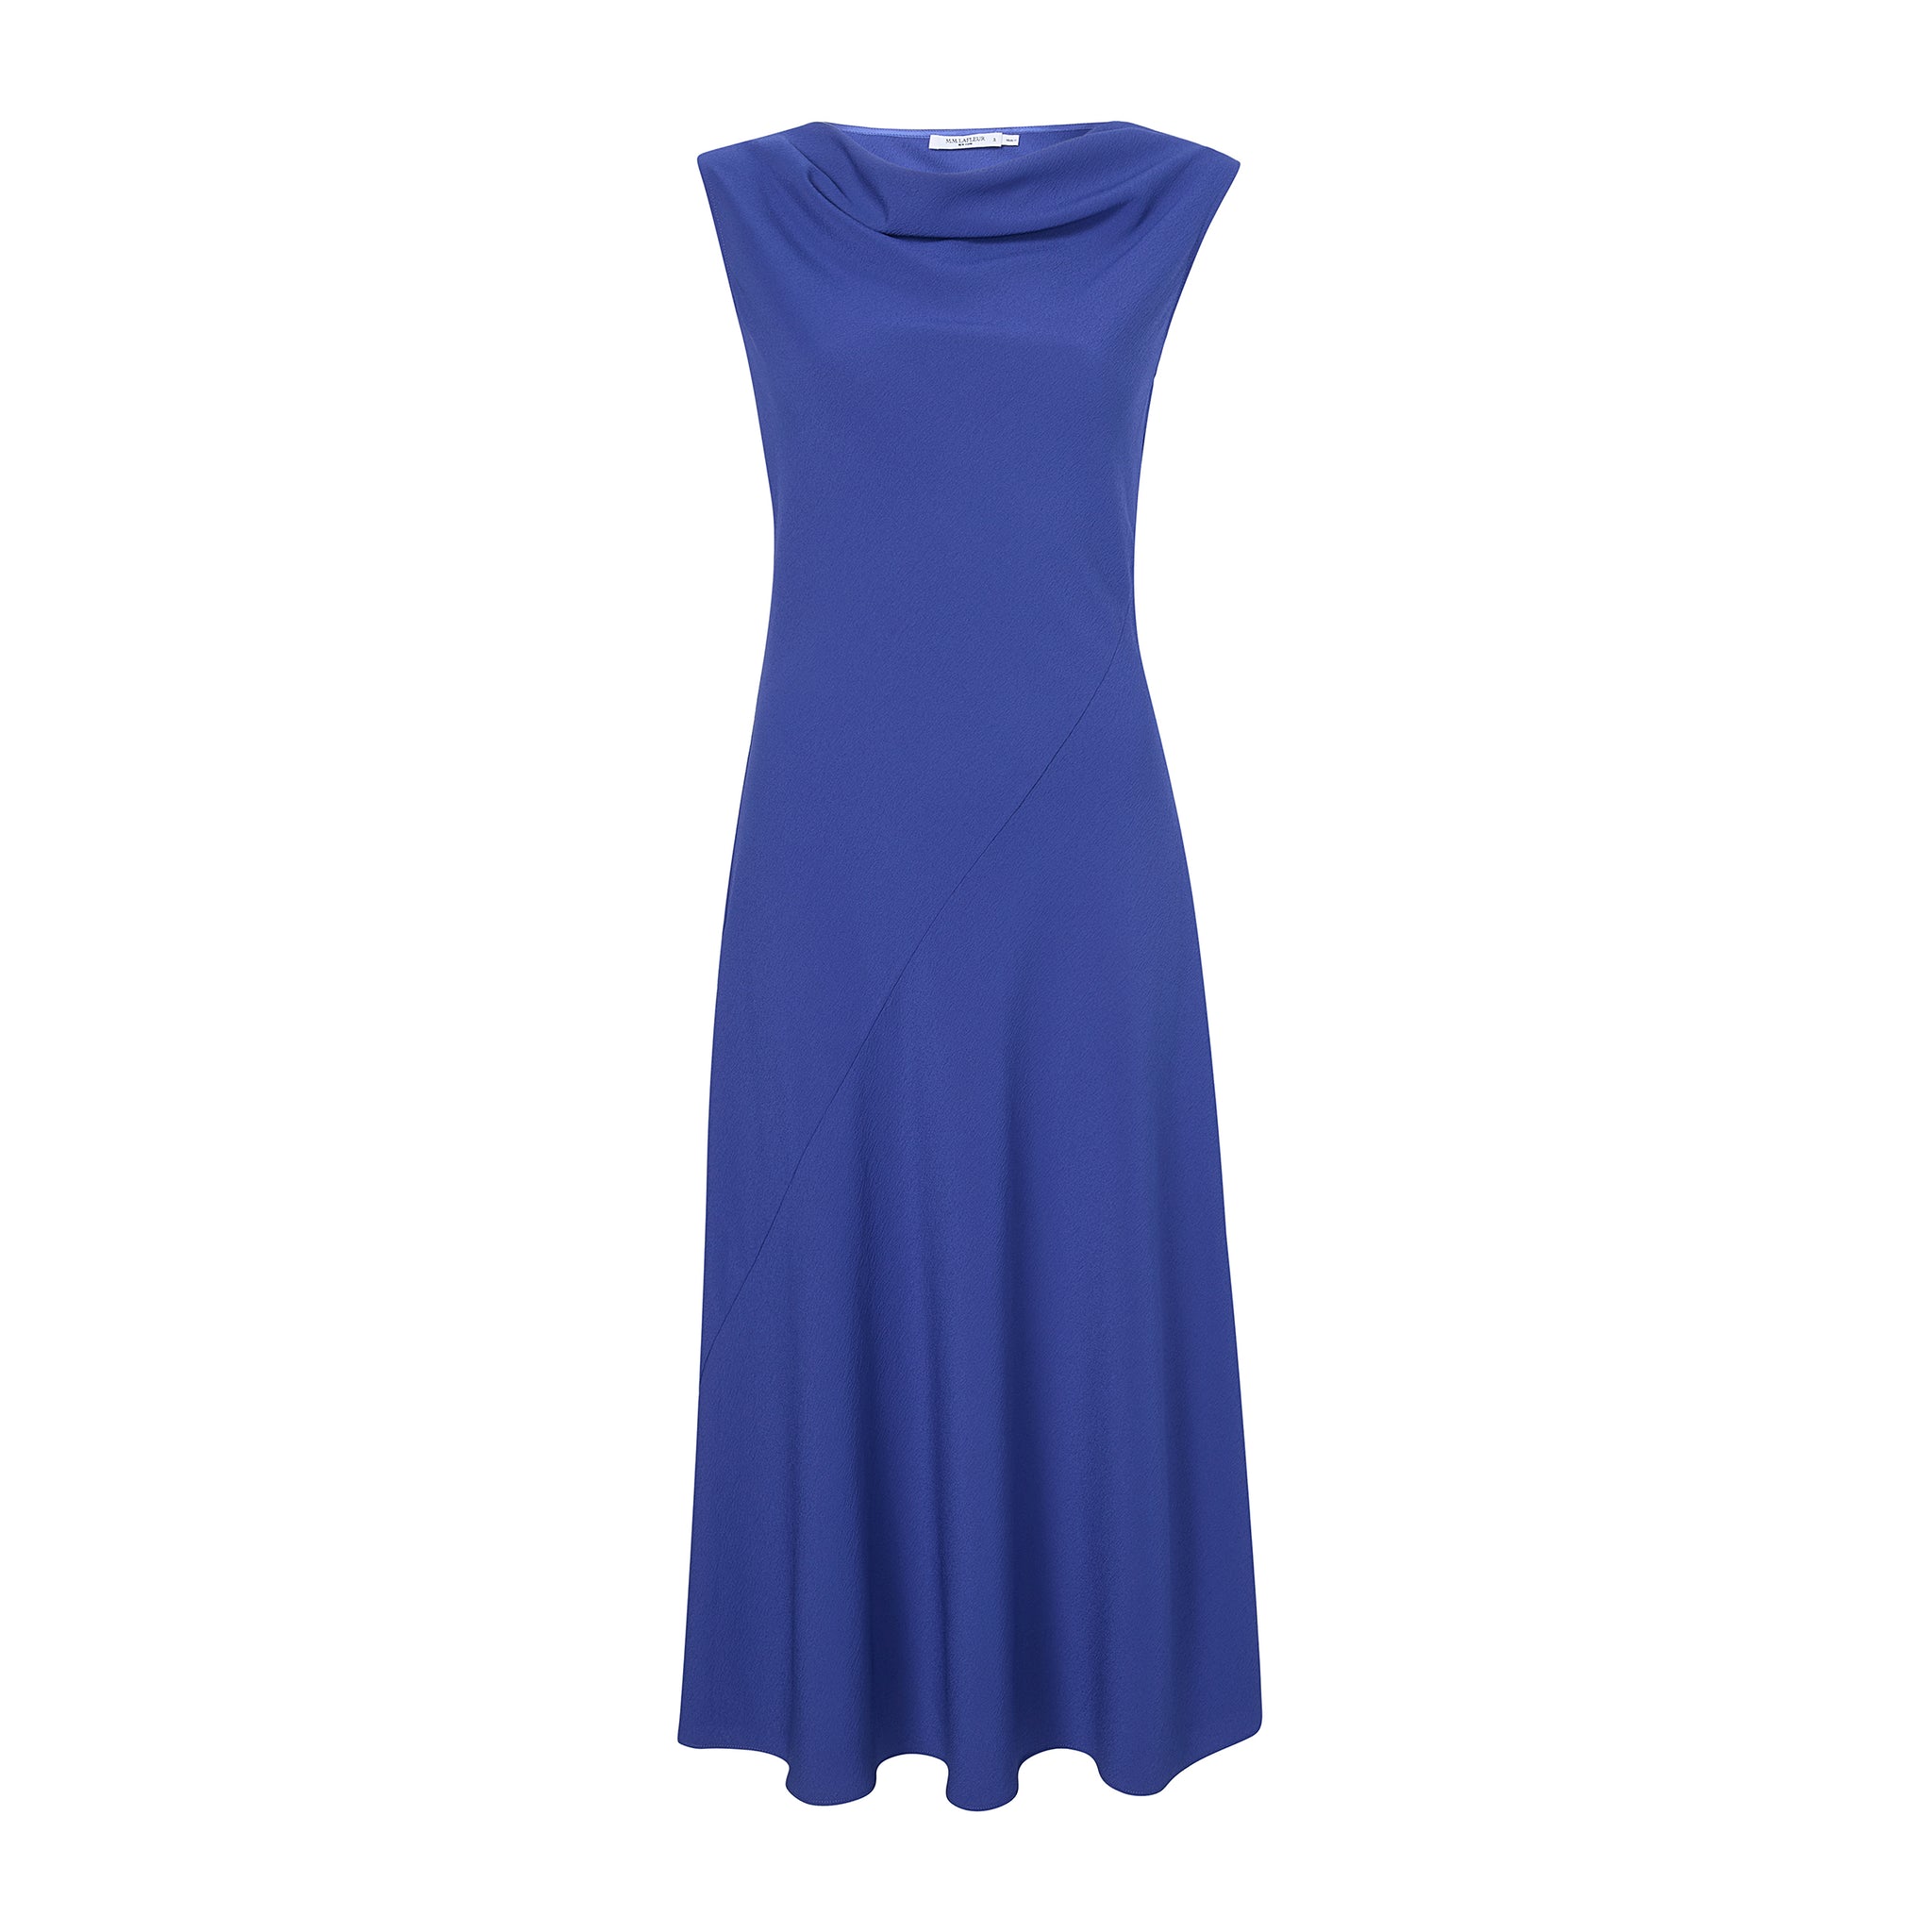 still image of the priya dress in electric blue 